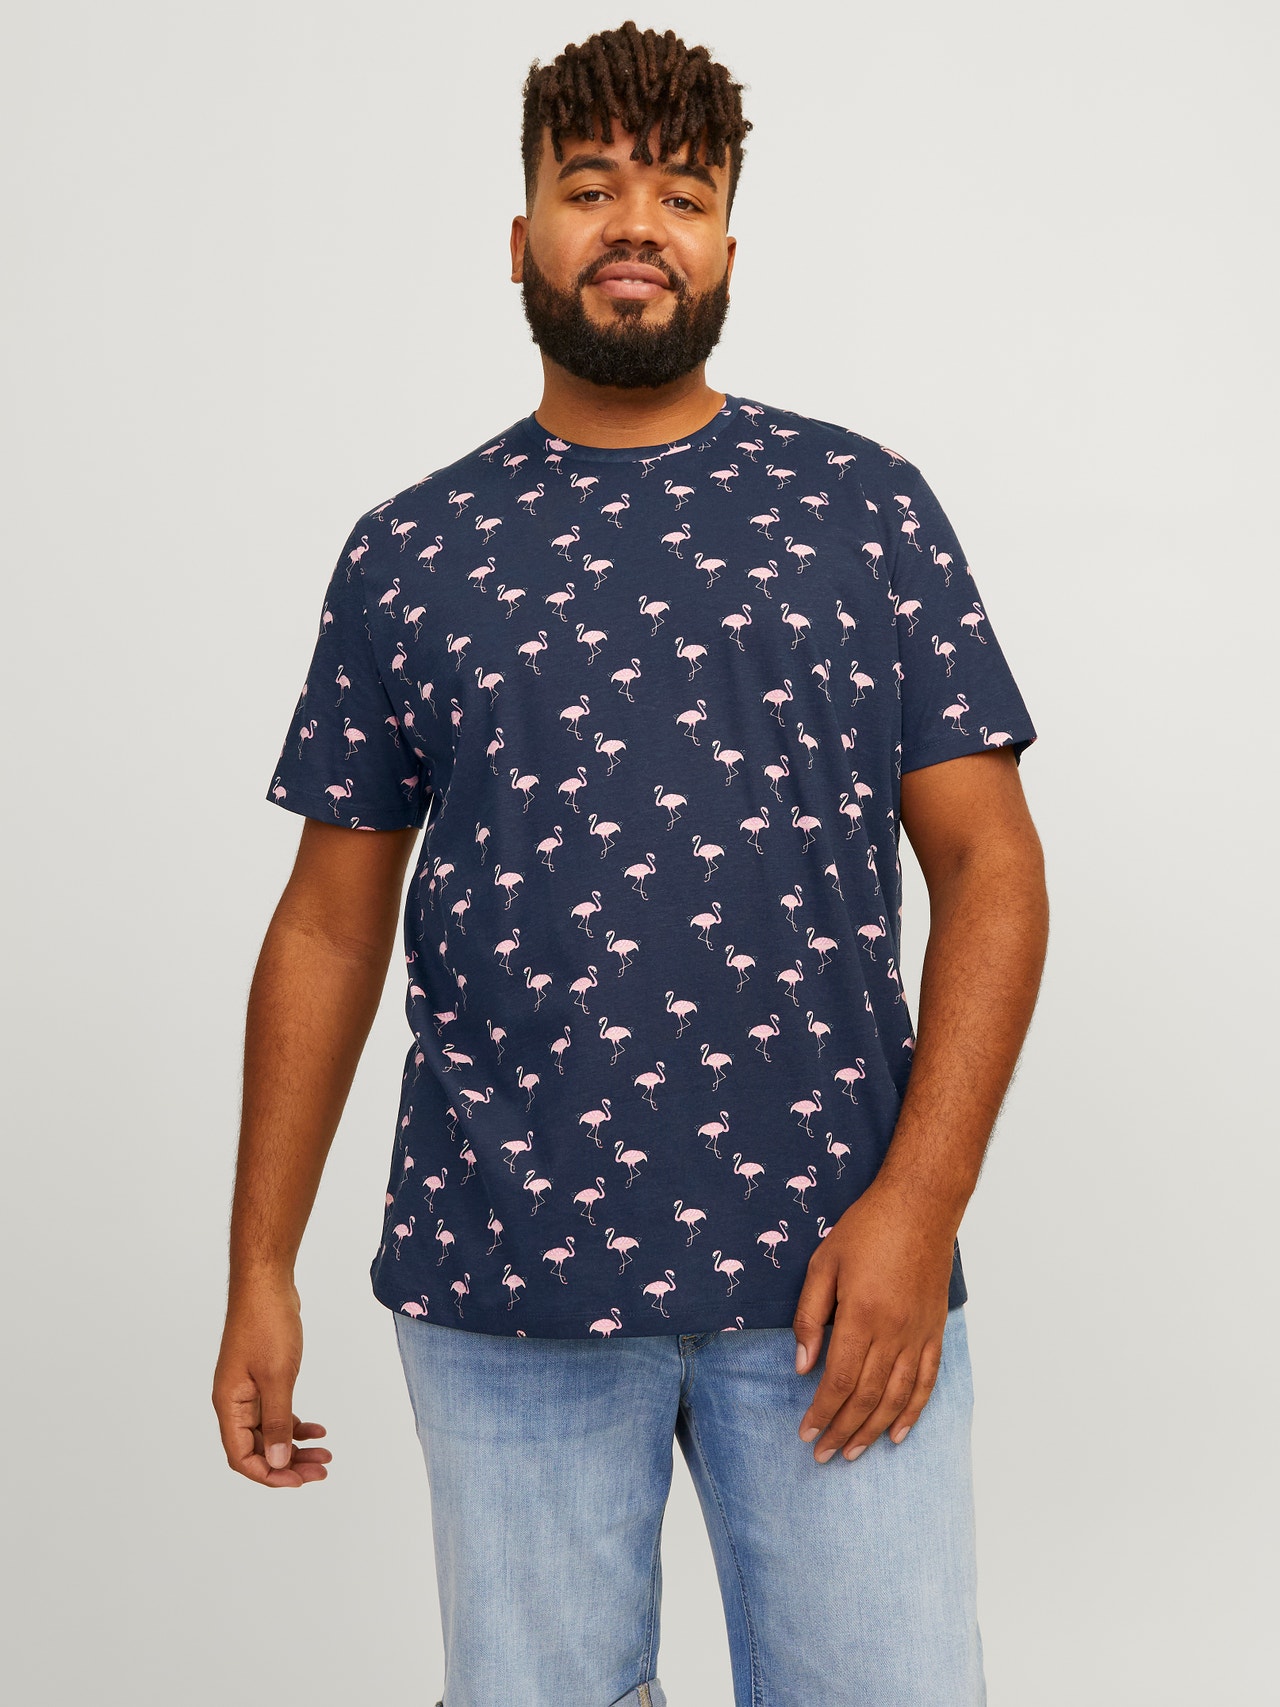 Jack & Jones Plus Size All Over Print T-shirt -Navy Blazer - 12254908